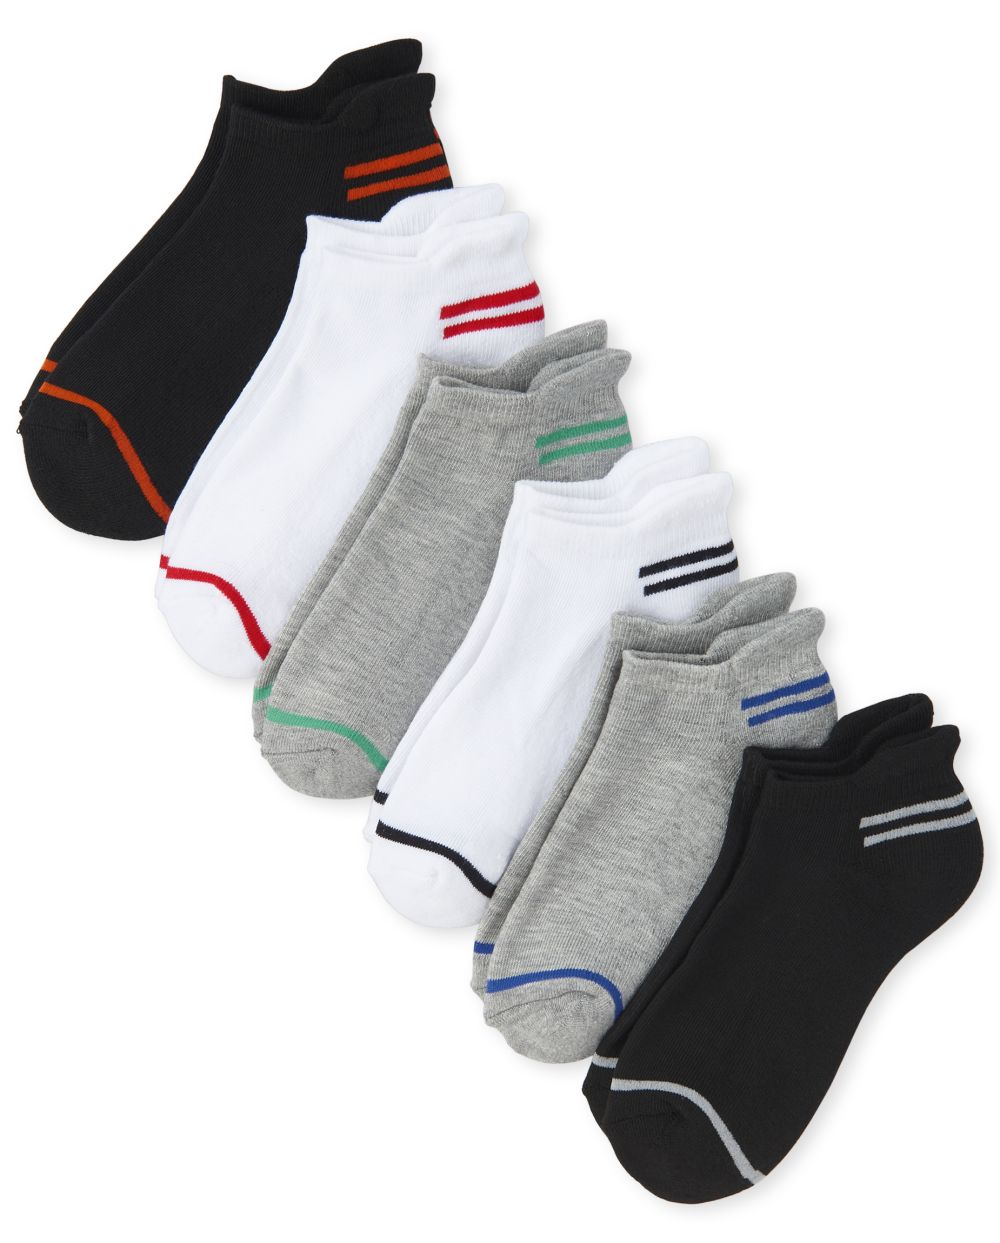 Boys Striped Ankle Socks 6-Pack